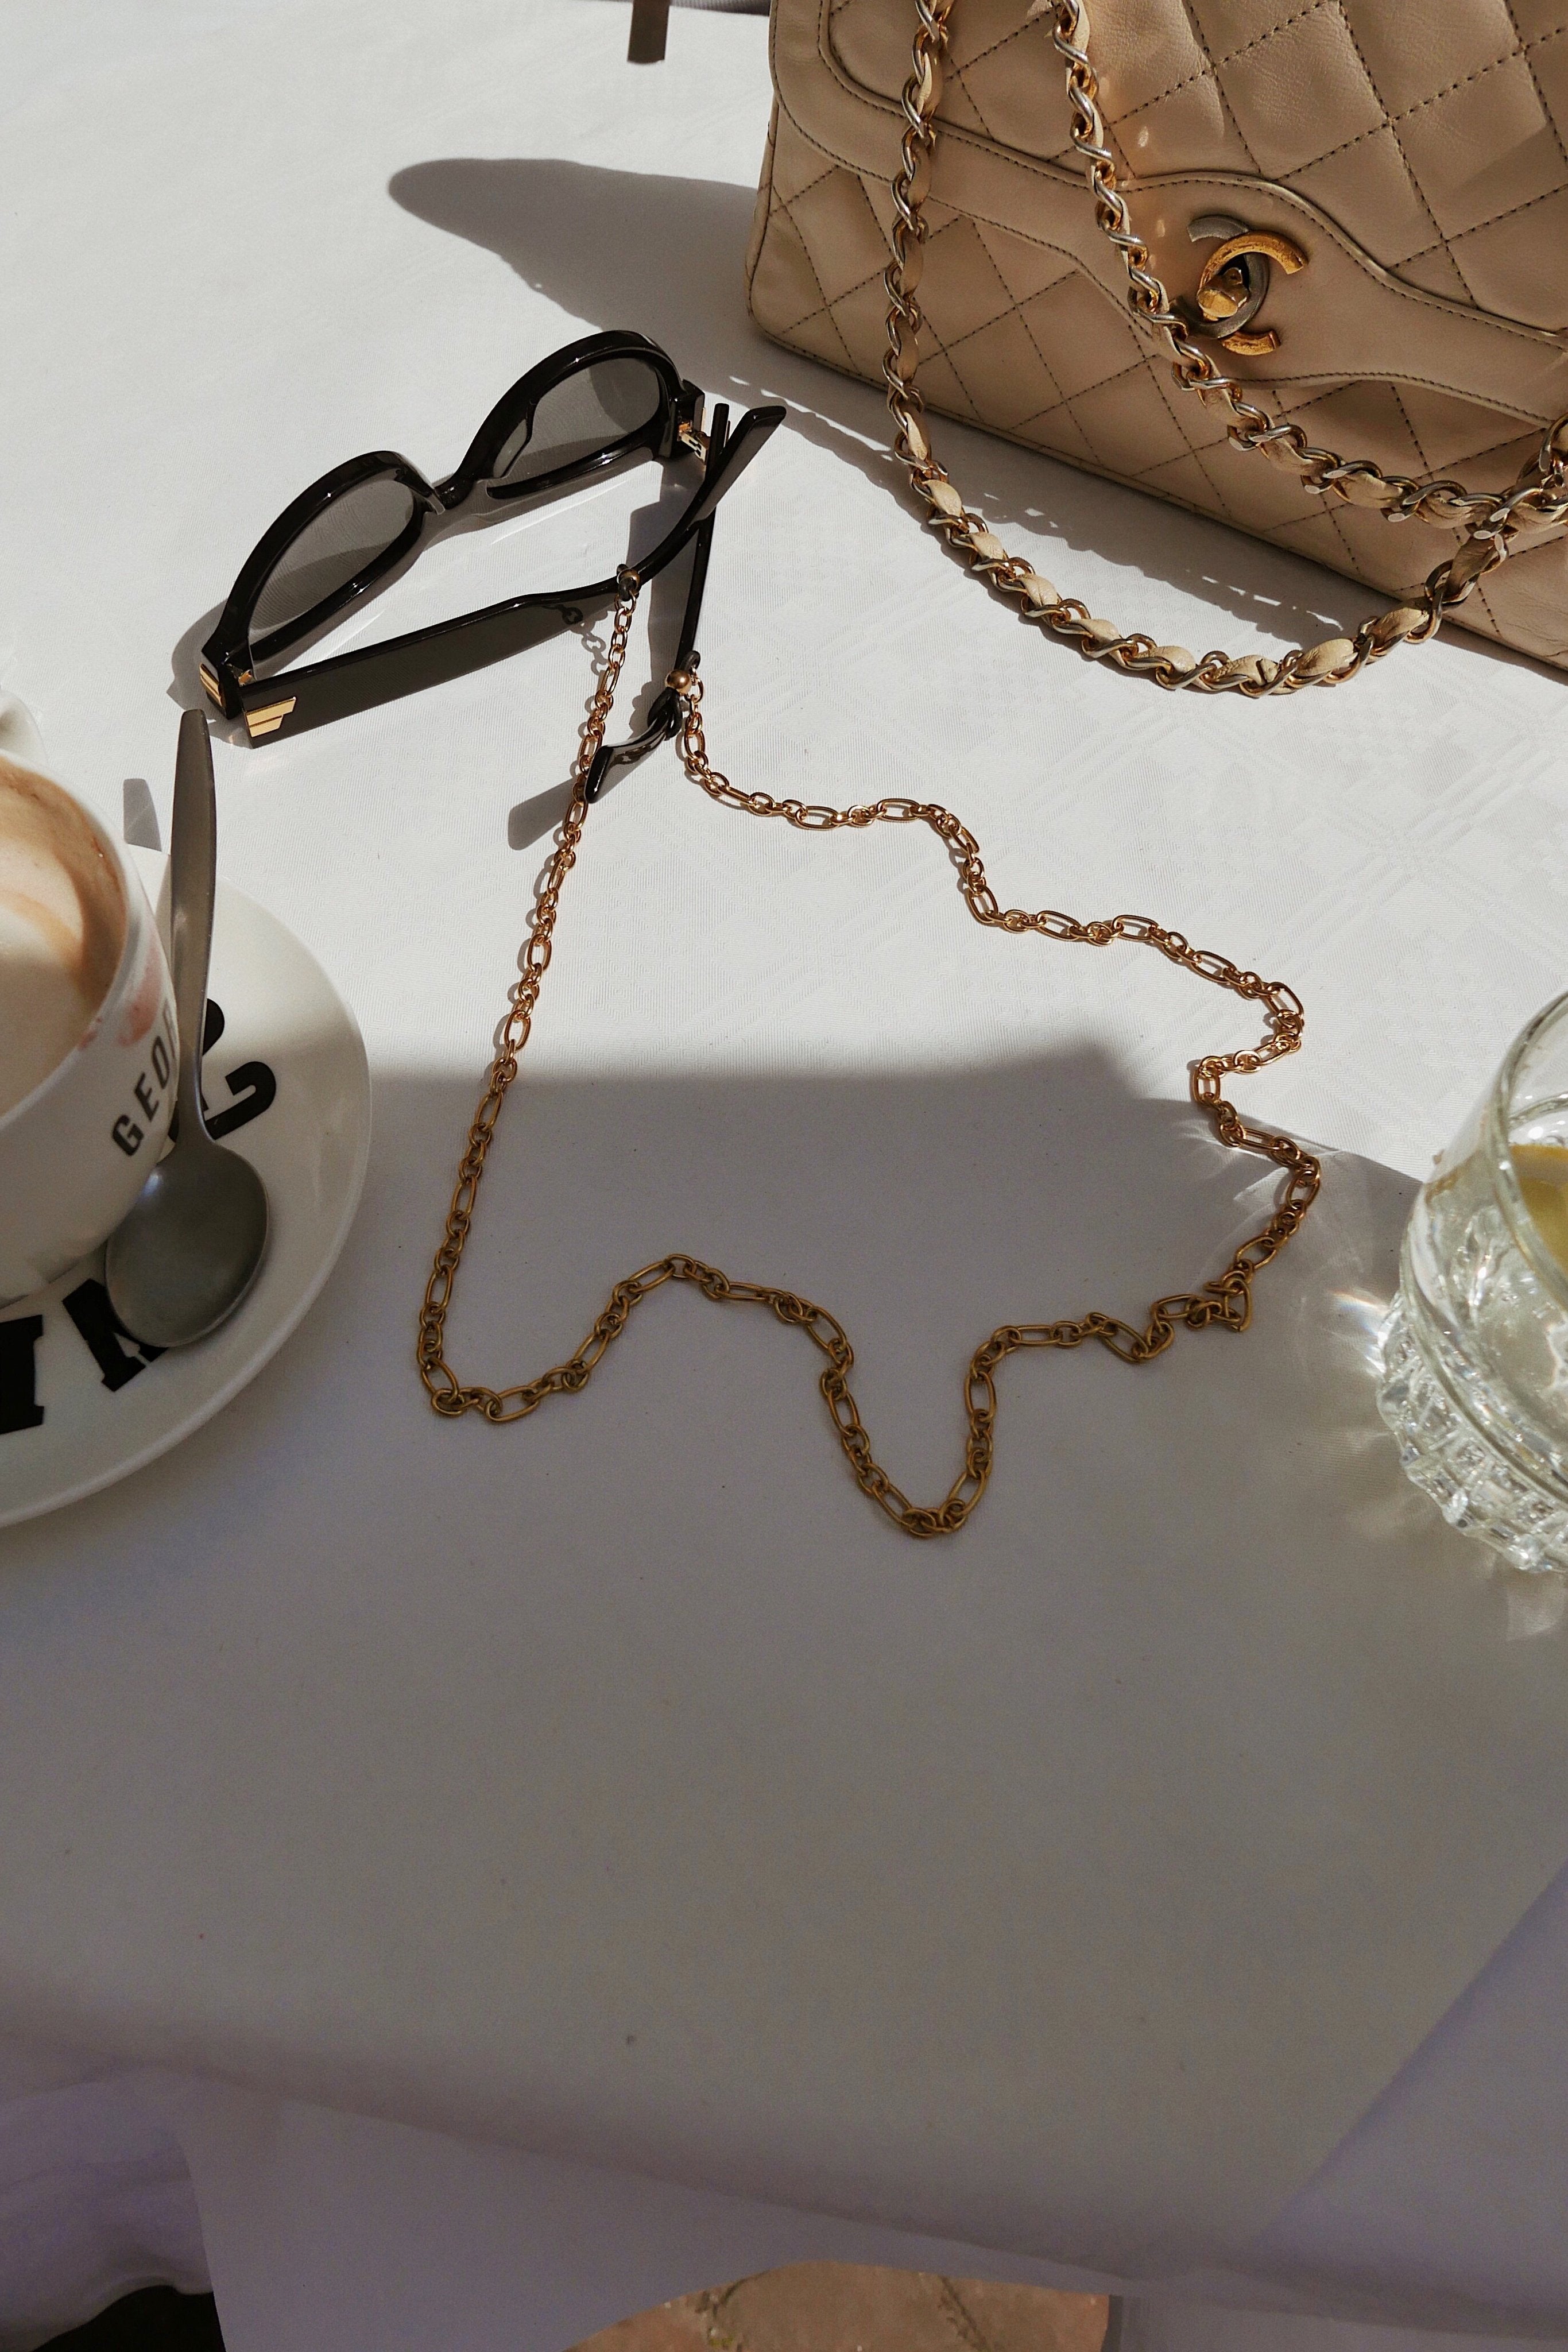 Costa Smeralda Sunglasses Chain - Boutique Minimaliste has waterproof, durable, elegant and vintage inspired jewelry